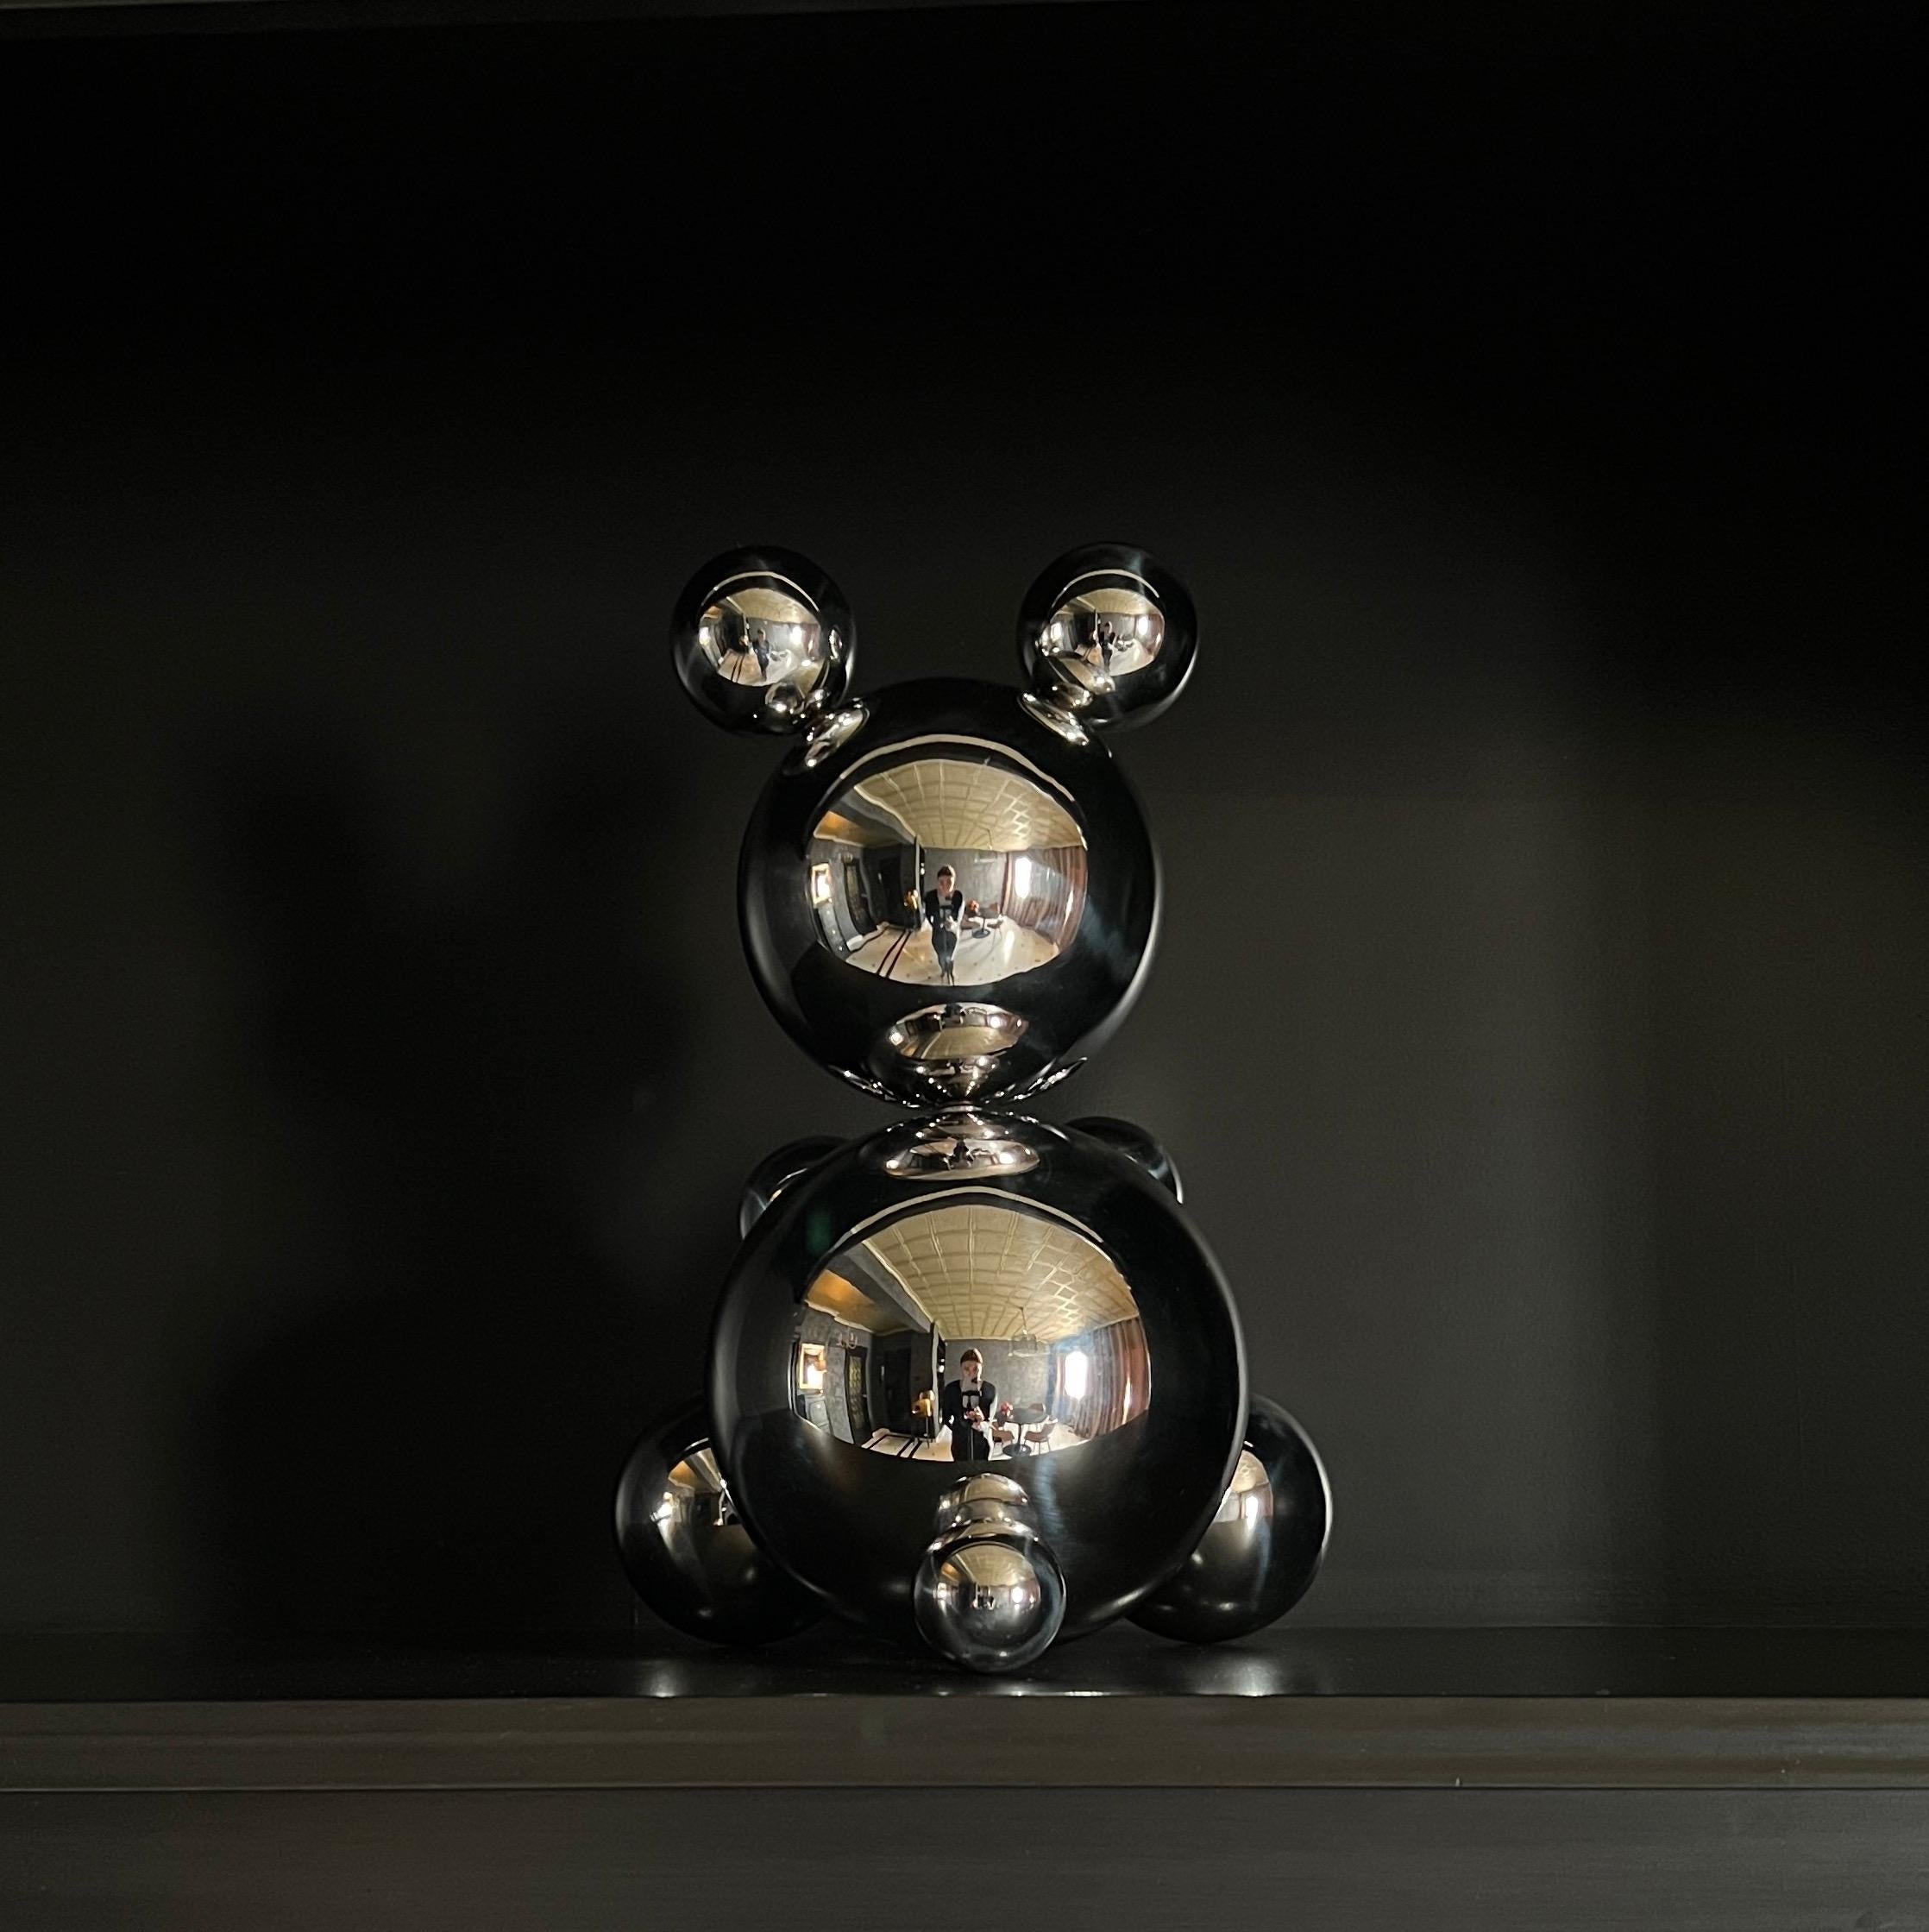 Middle Stainless Steel Bear 'Thomas' Sculpture Minimalistic Animal 2